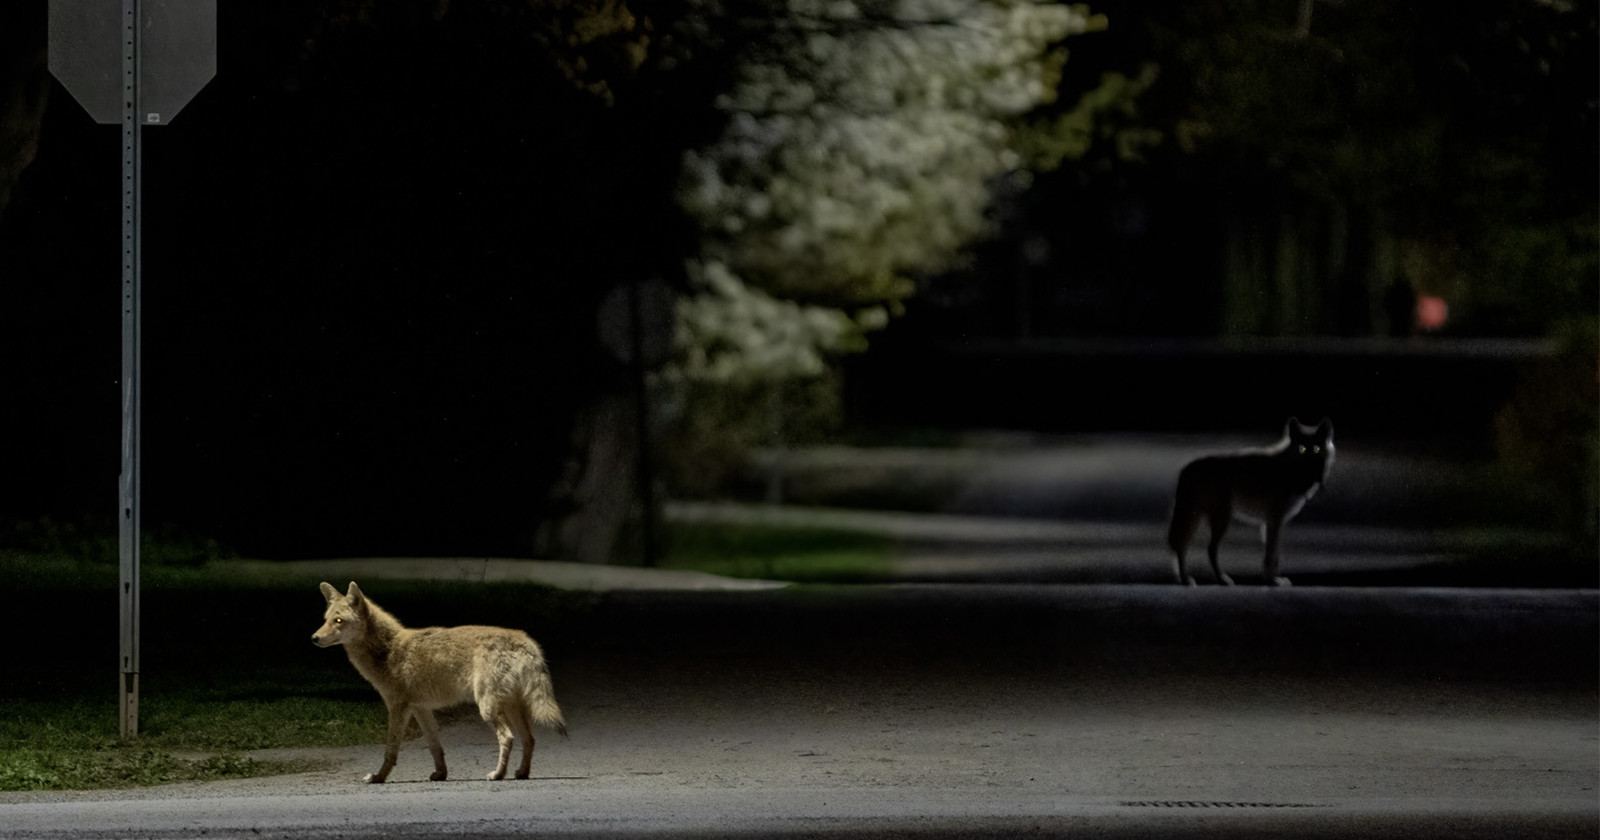  coyotes roaming streets ontario wins urban wildlife 